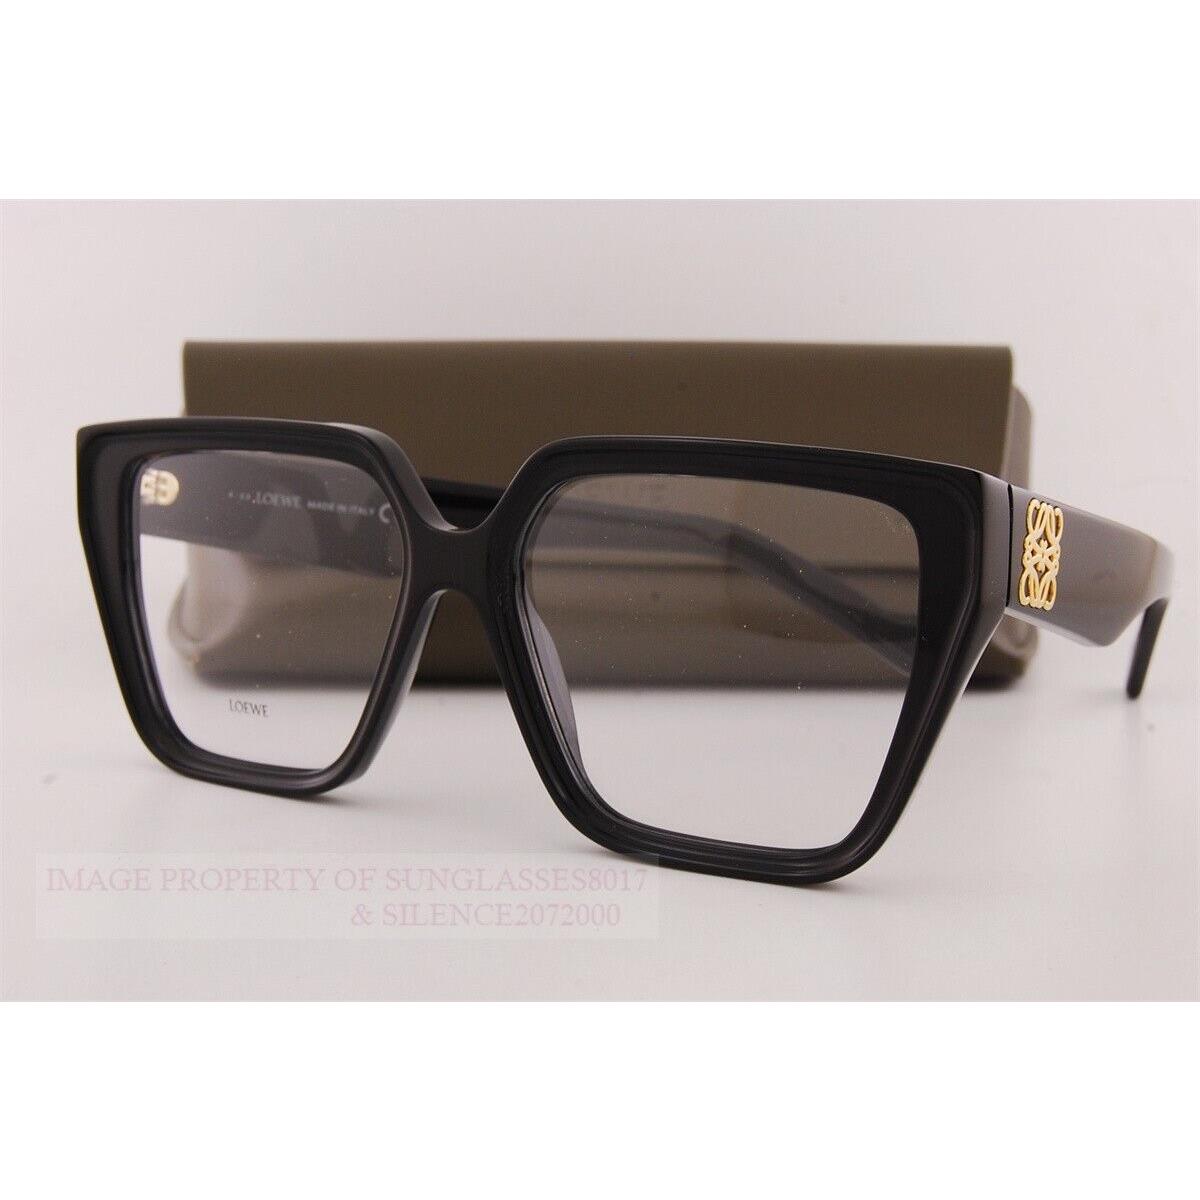 Loewe Eyeglass Frames LW 50042I 001 Black For Women Size 55mm